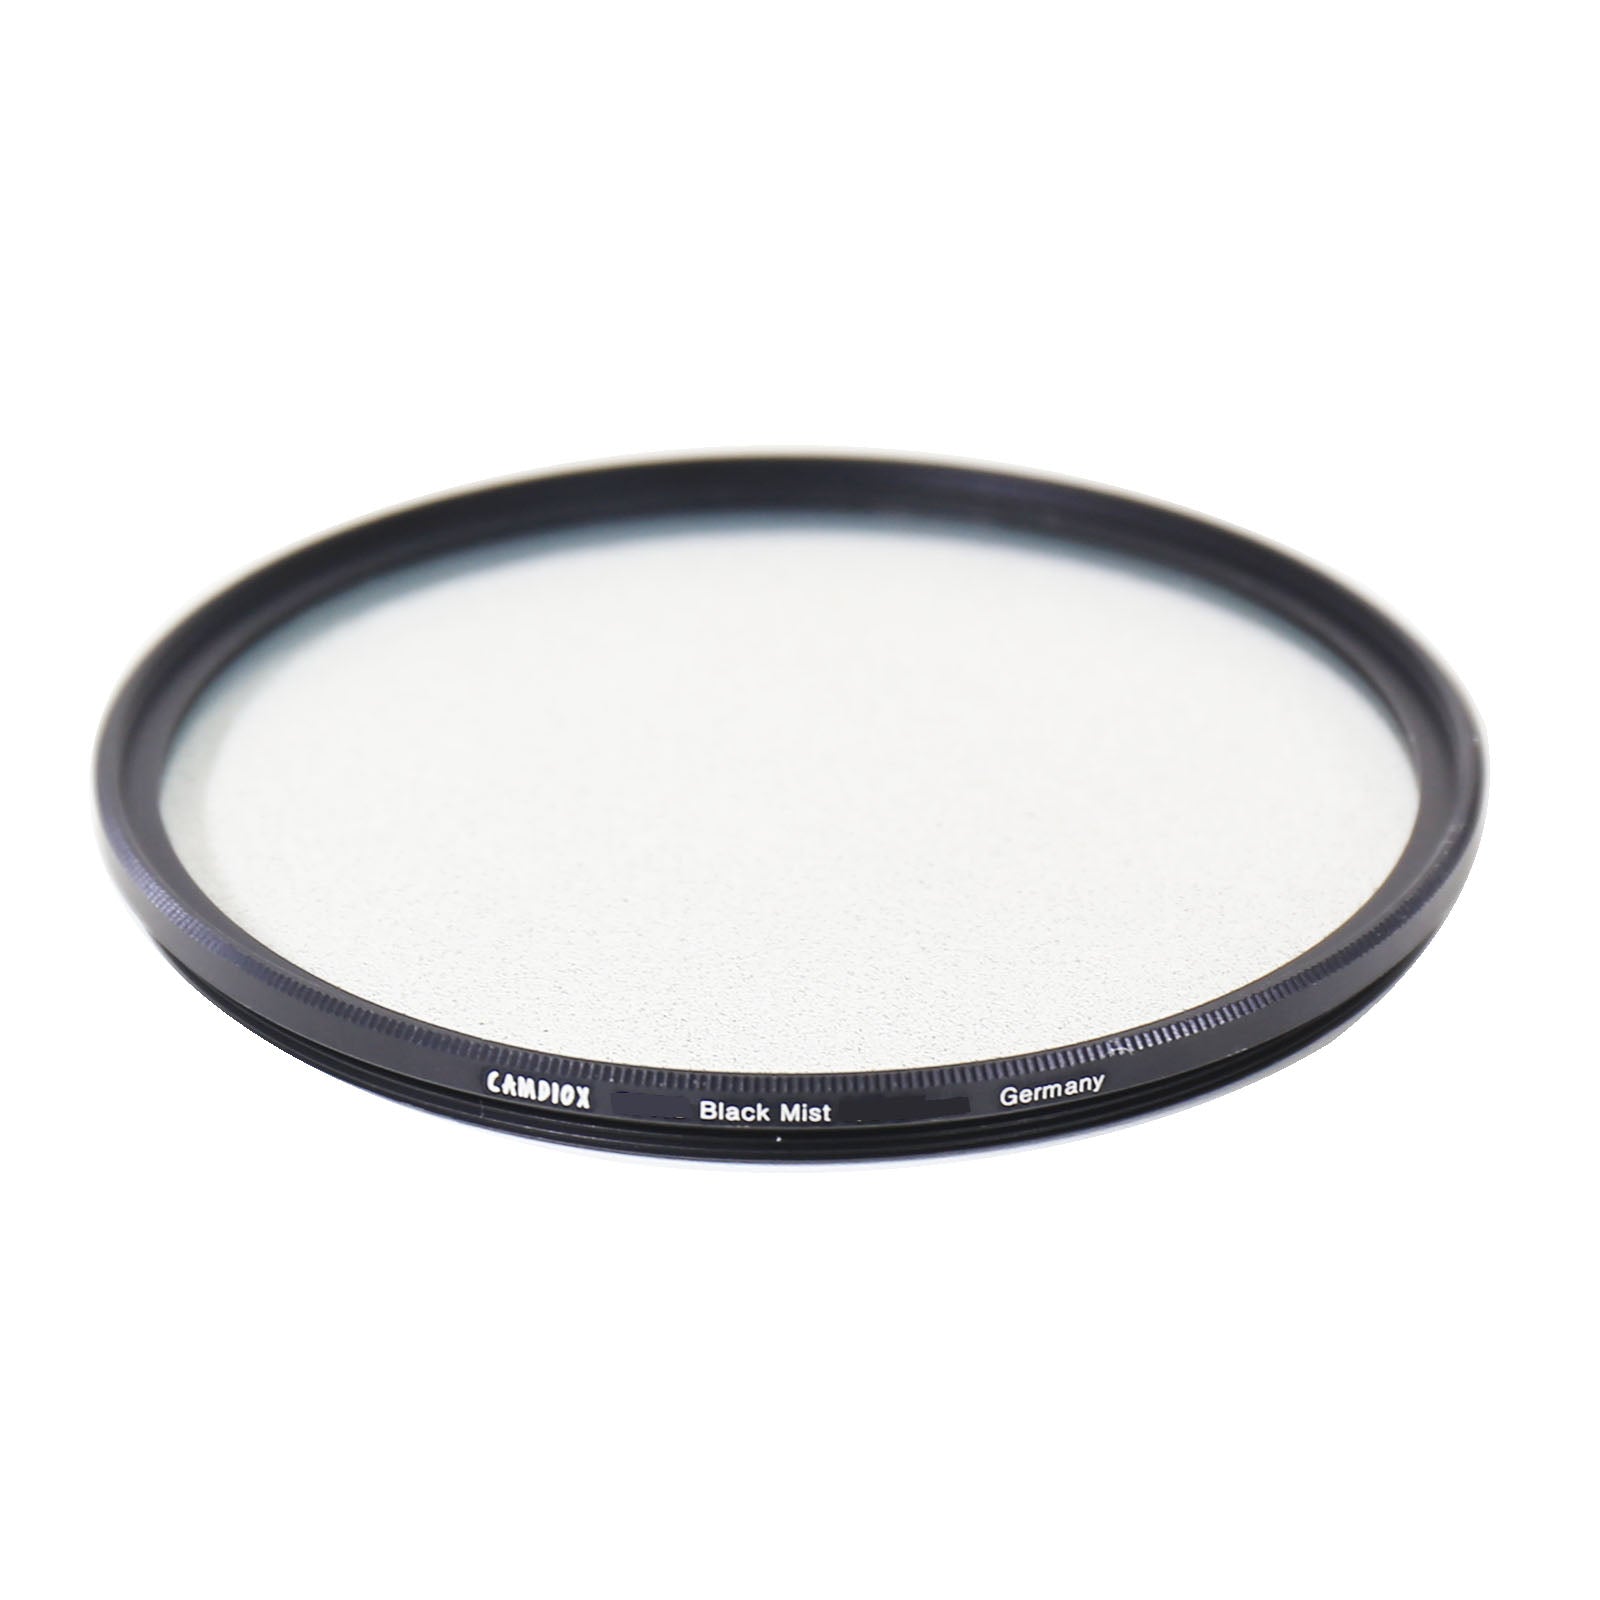 Camdiox Cinepro Pro Filter - Black Mist - 1/4 1/8 soften soft focus effect filter for Canon Nikon Sony Olympus Leica DSLR mirrorless camera lenses